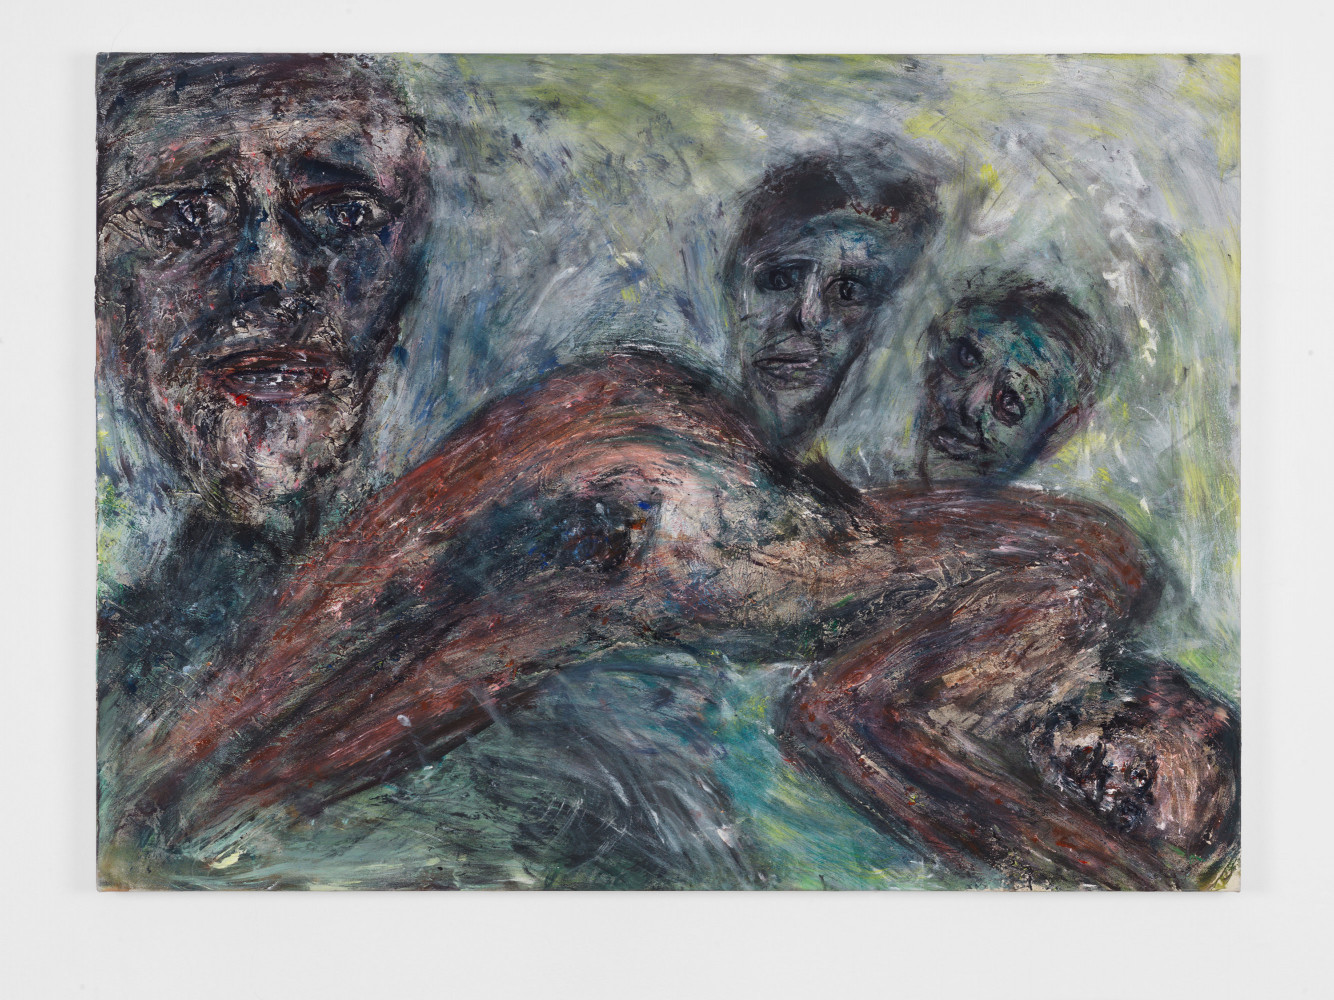 Martin Disler, Untitled, 1992, acrylic on canvas, 110 x 150 cm / 43¼ x 59 in